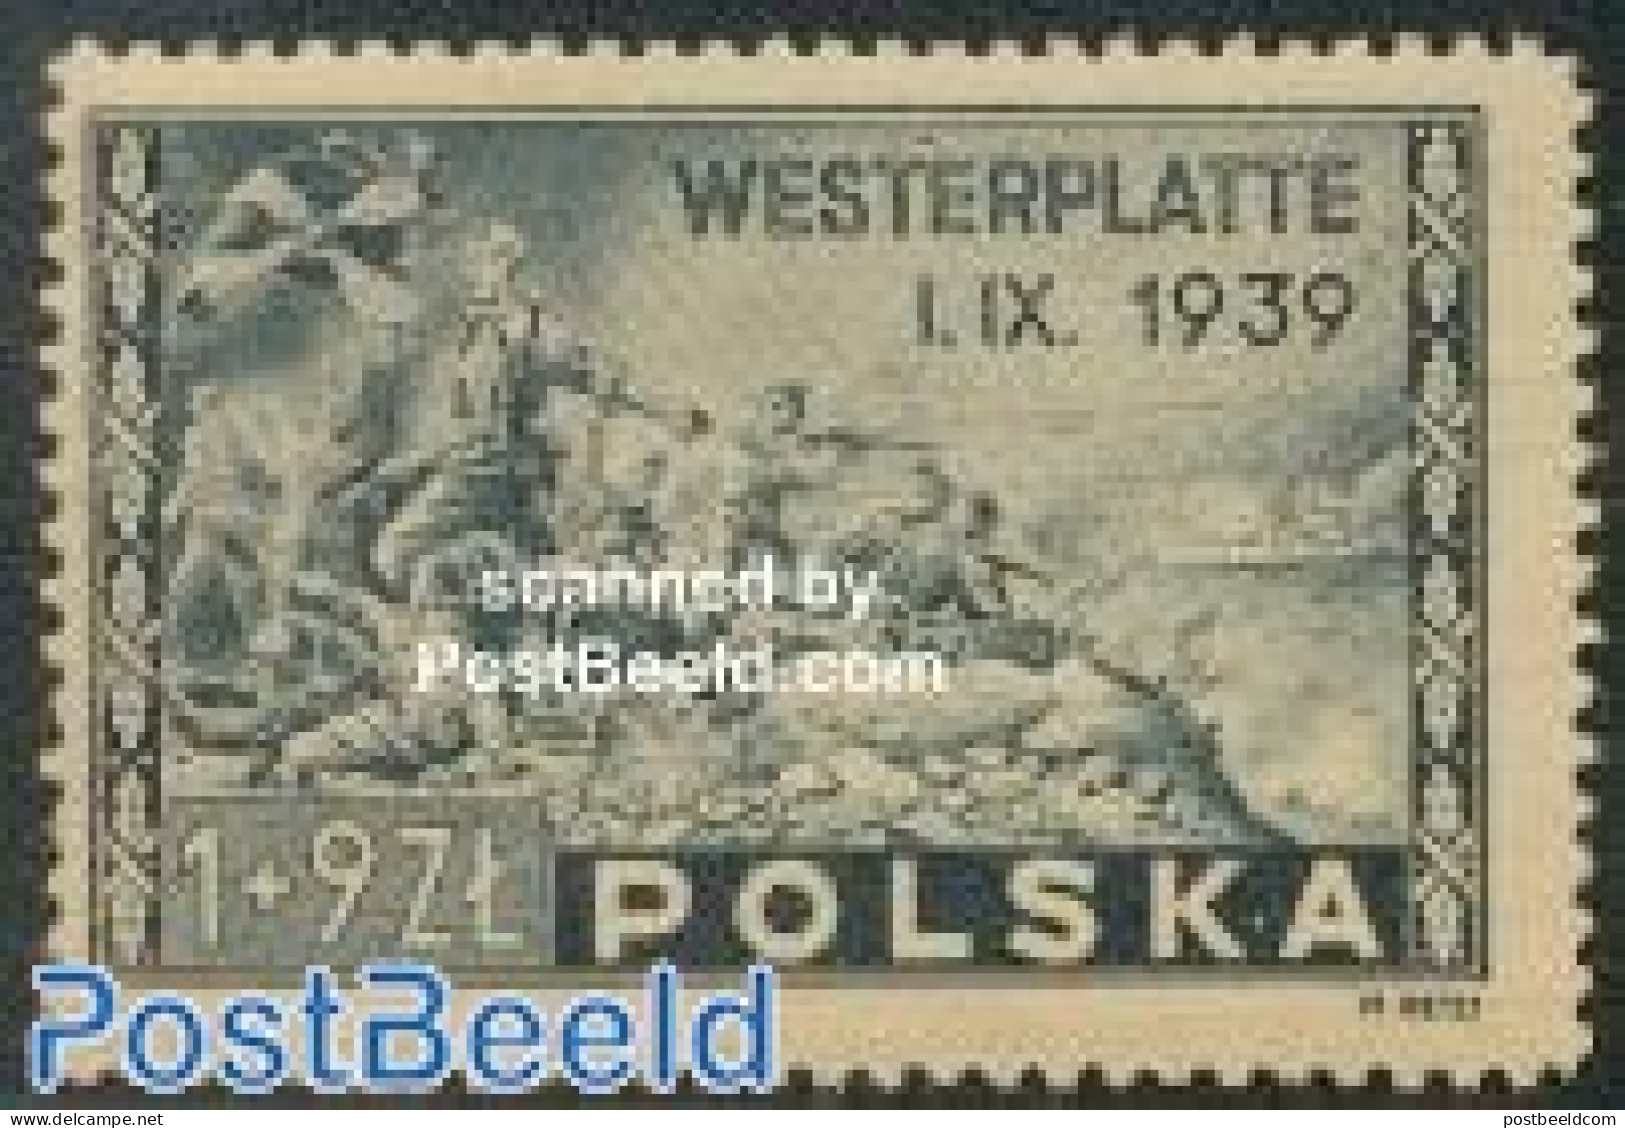 Poland 1945 Westerplatte 1v, Mint NH, History - Flags - Militarism - Nuevos